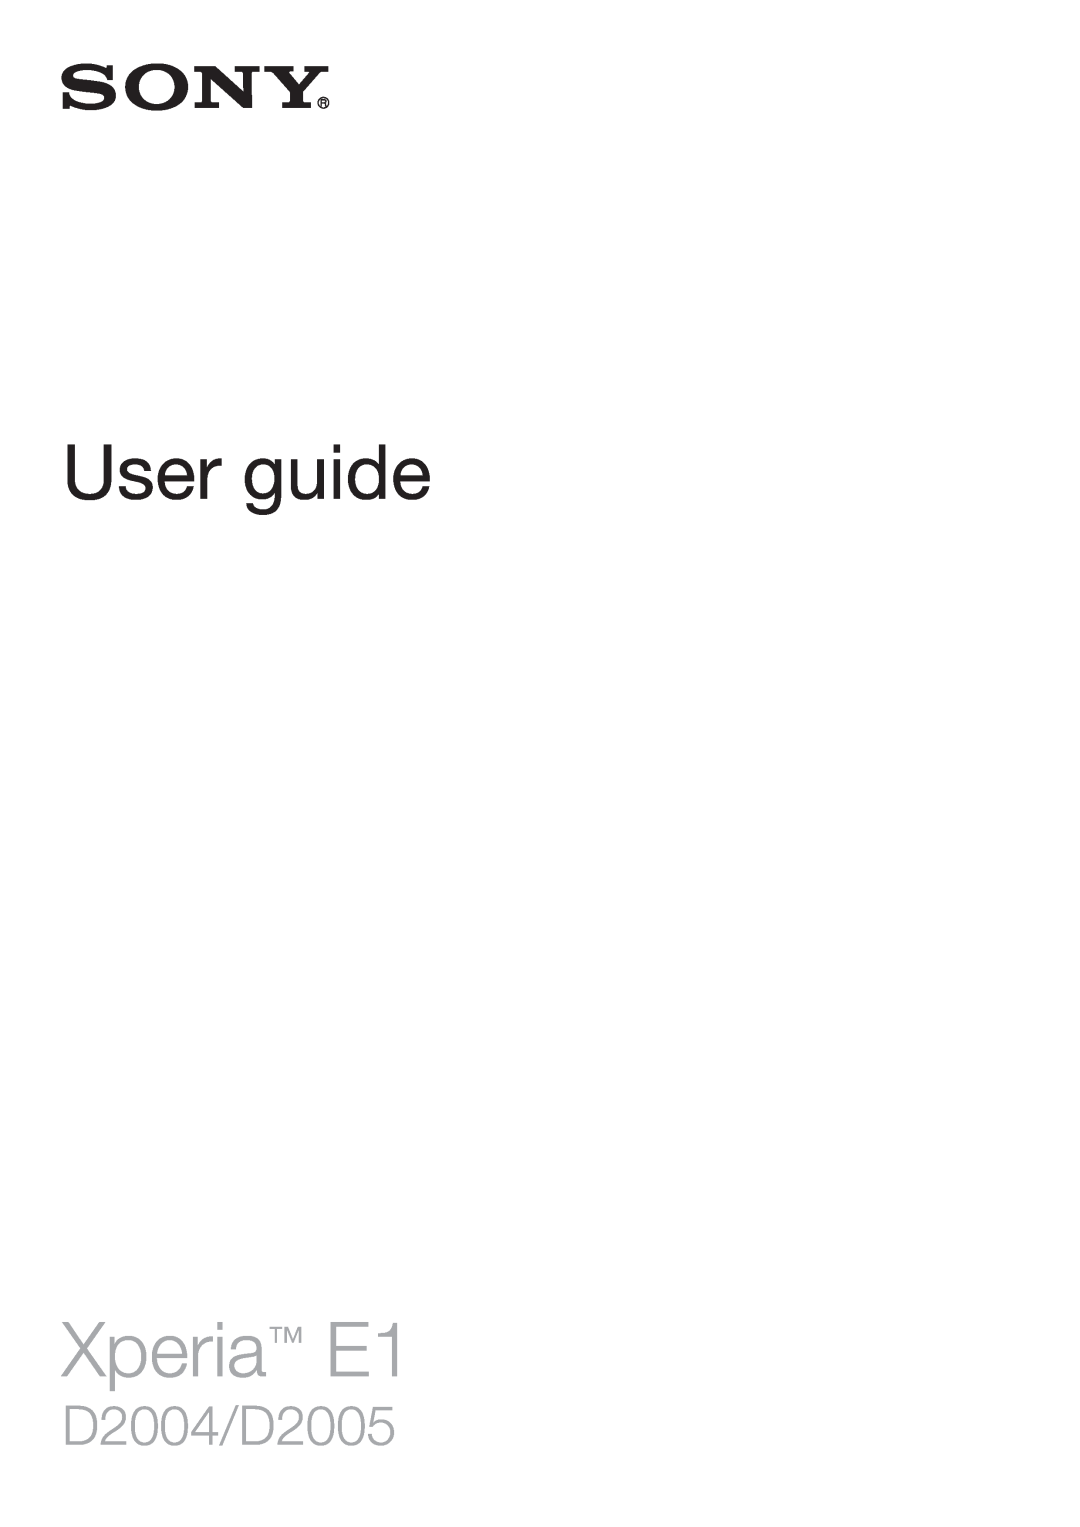 Sony manual User guide, Xperia E1, D2004/D2005 